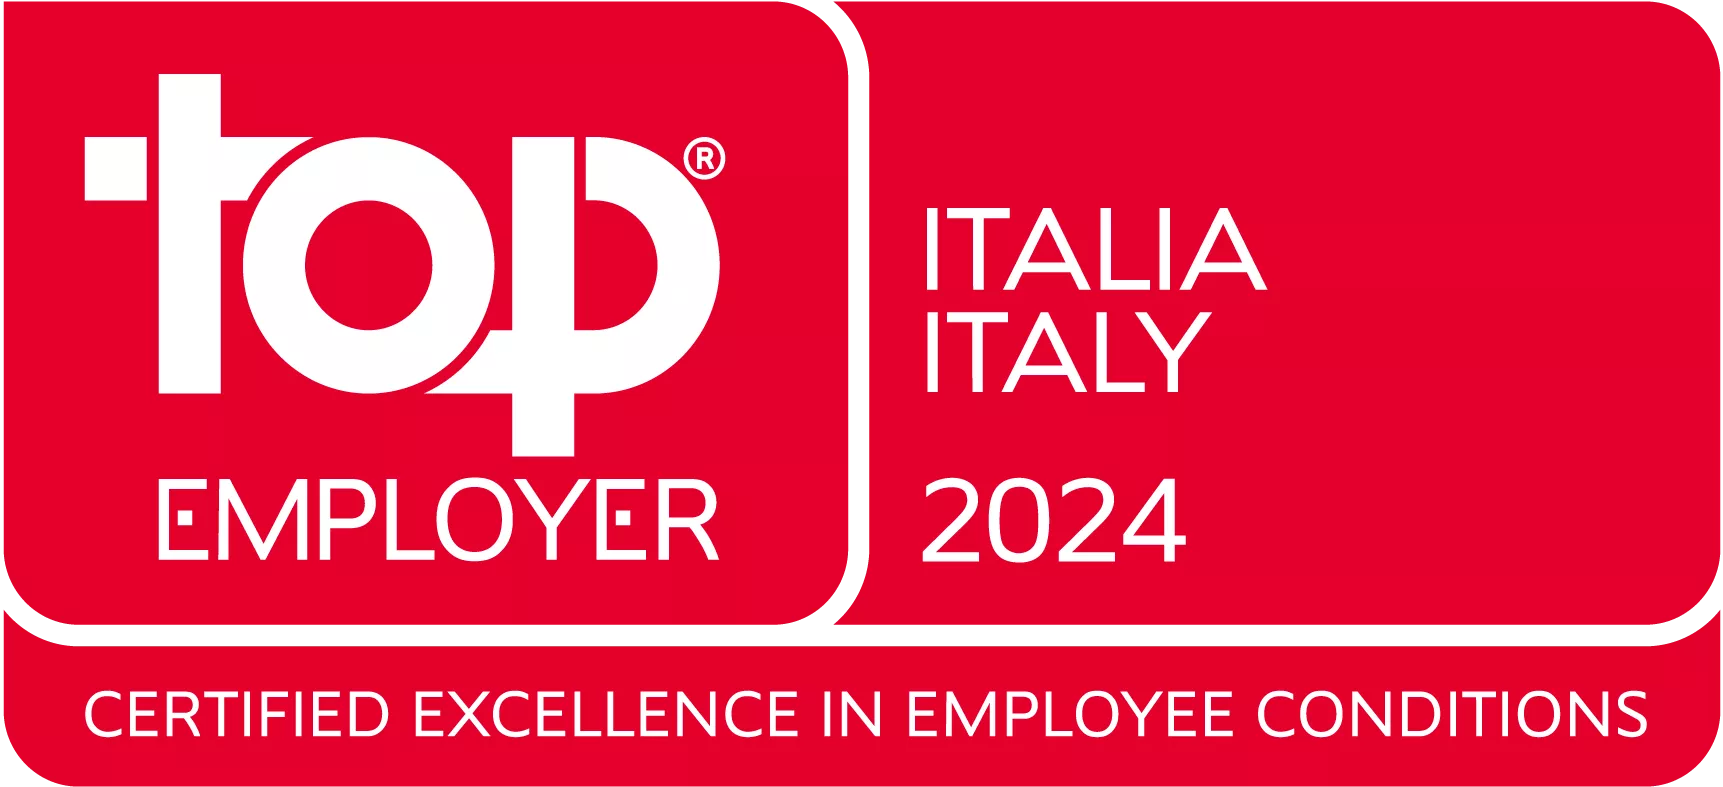 Top employer 2024